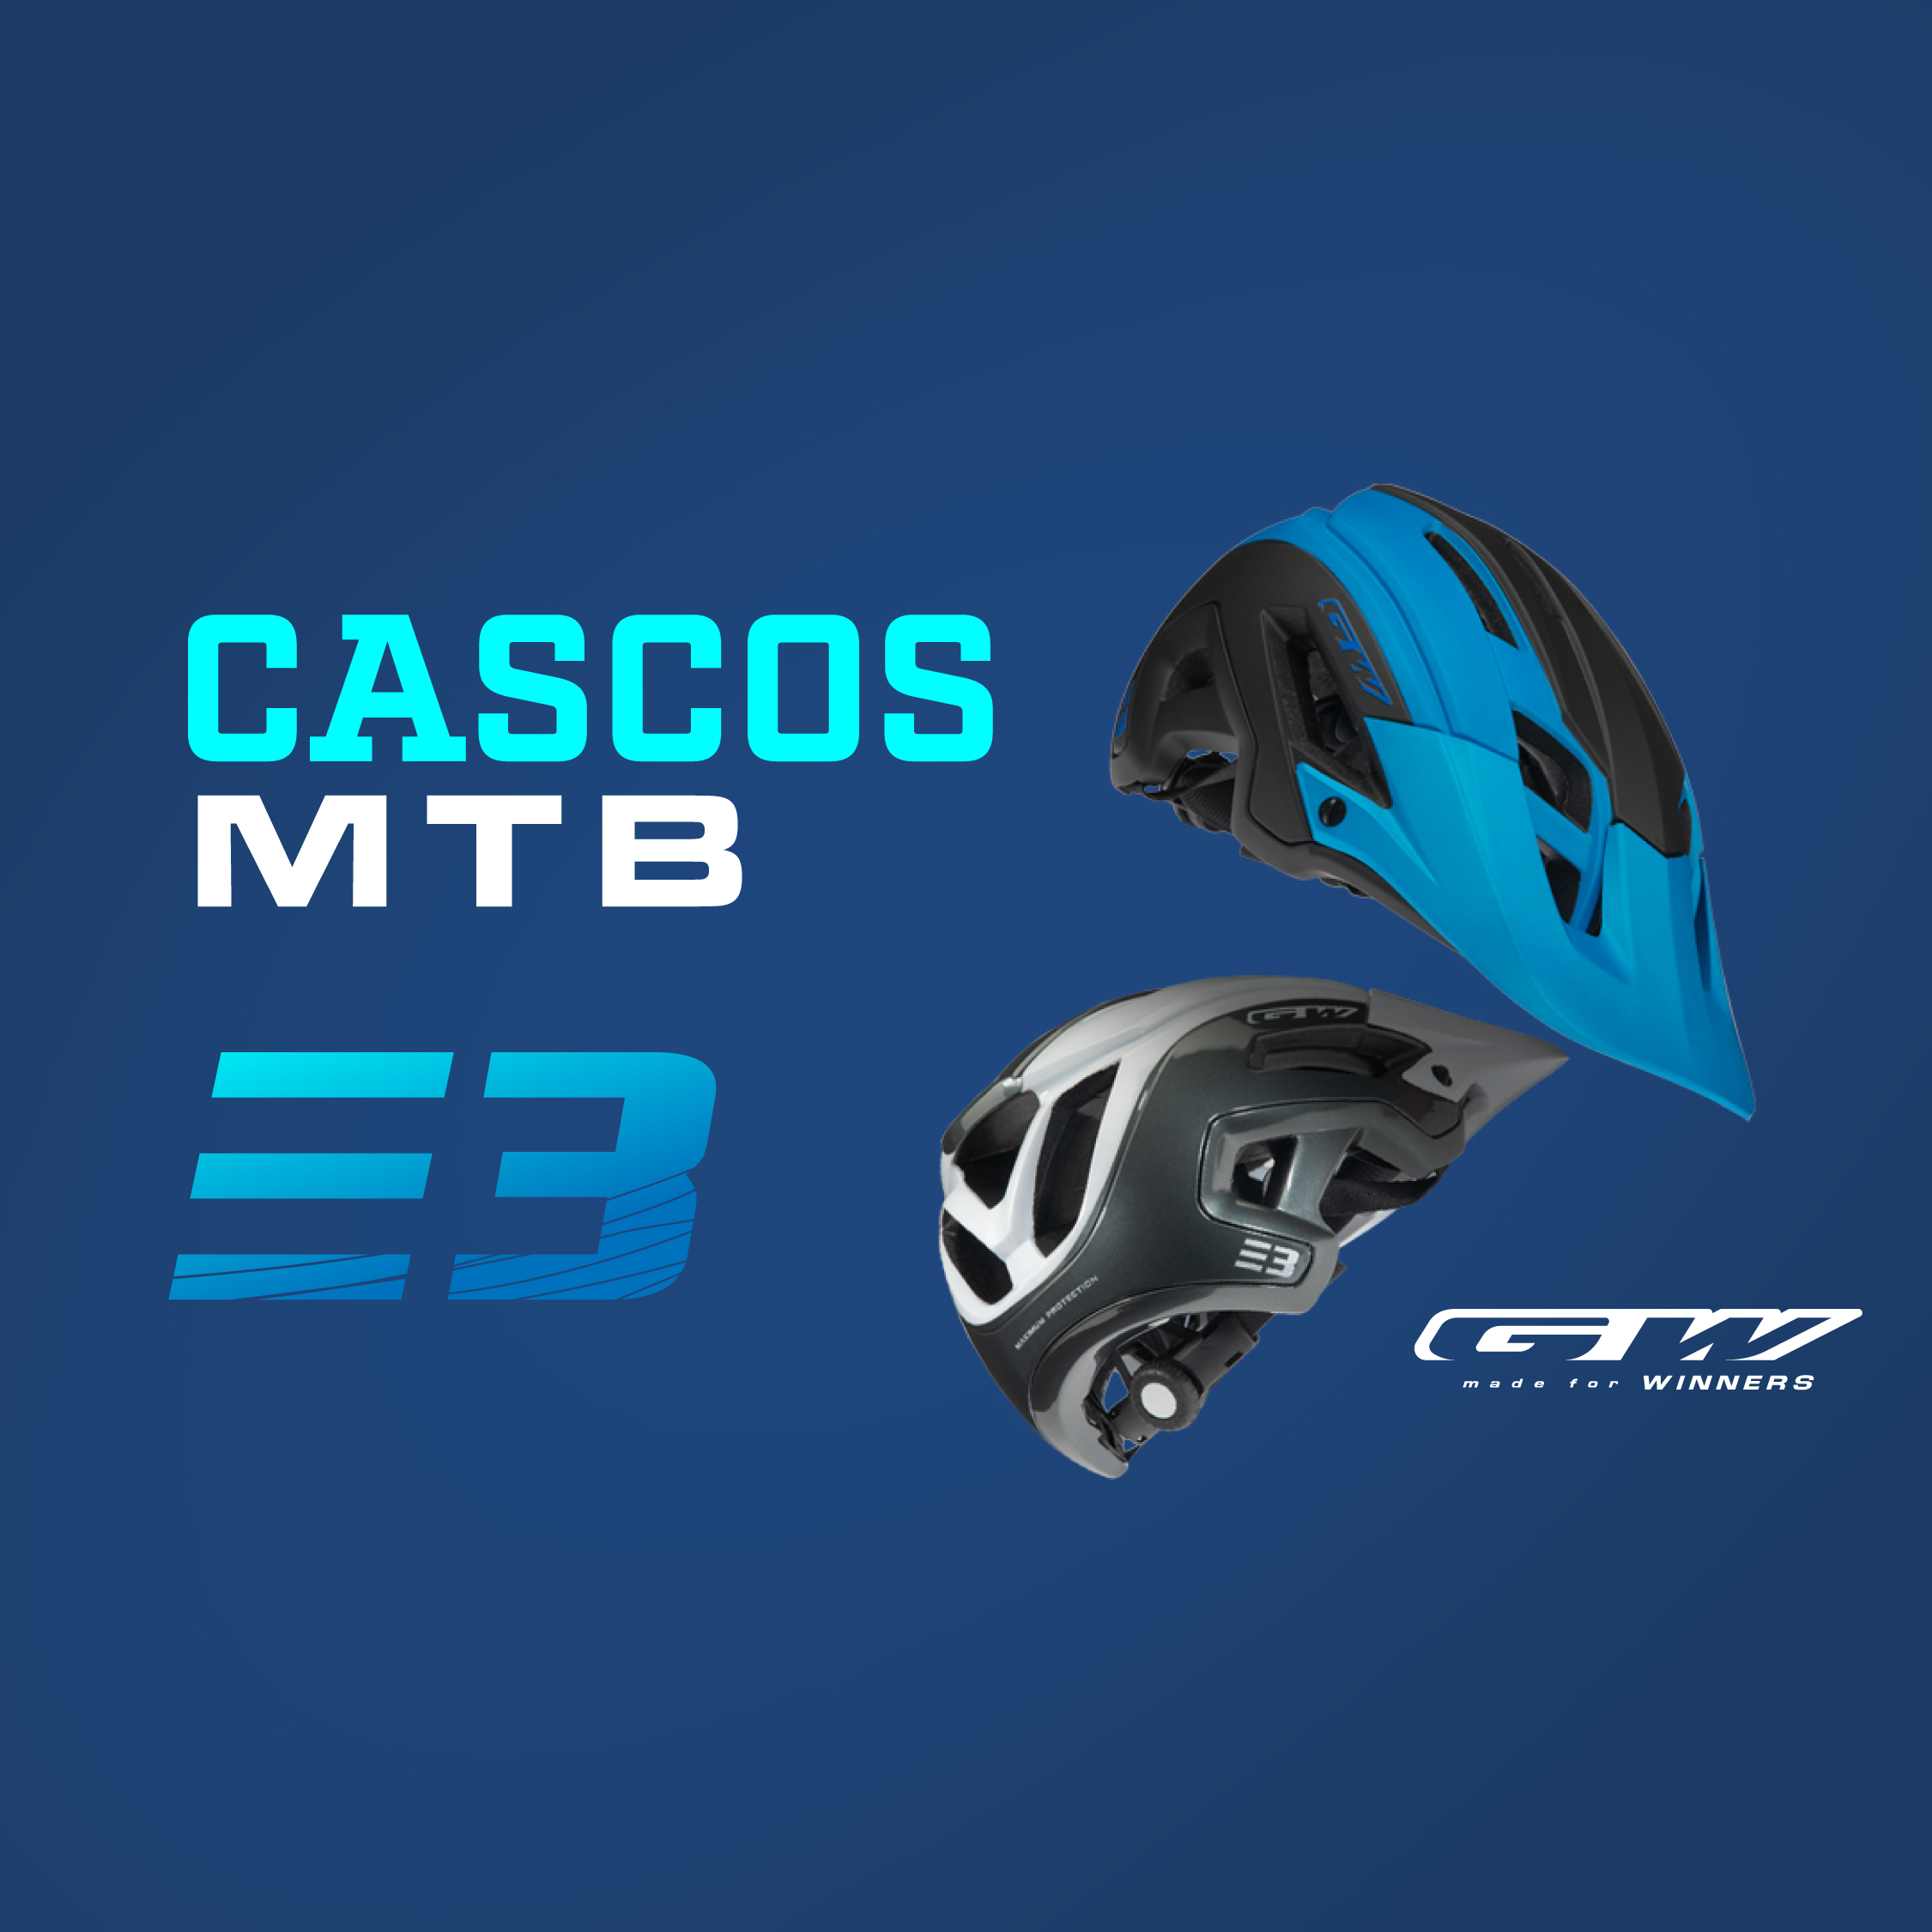 CASCO MTB ENDURO E3 GW - Evolution Movilidad